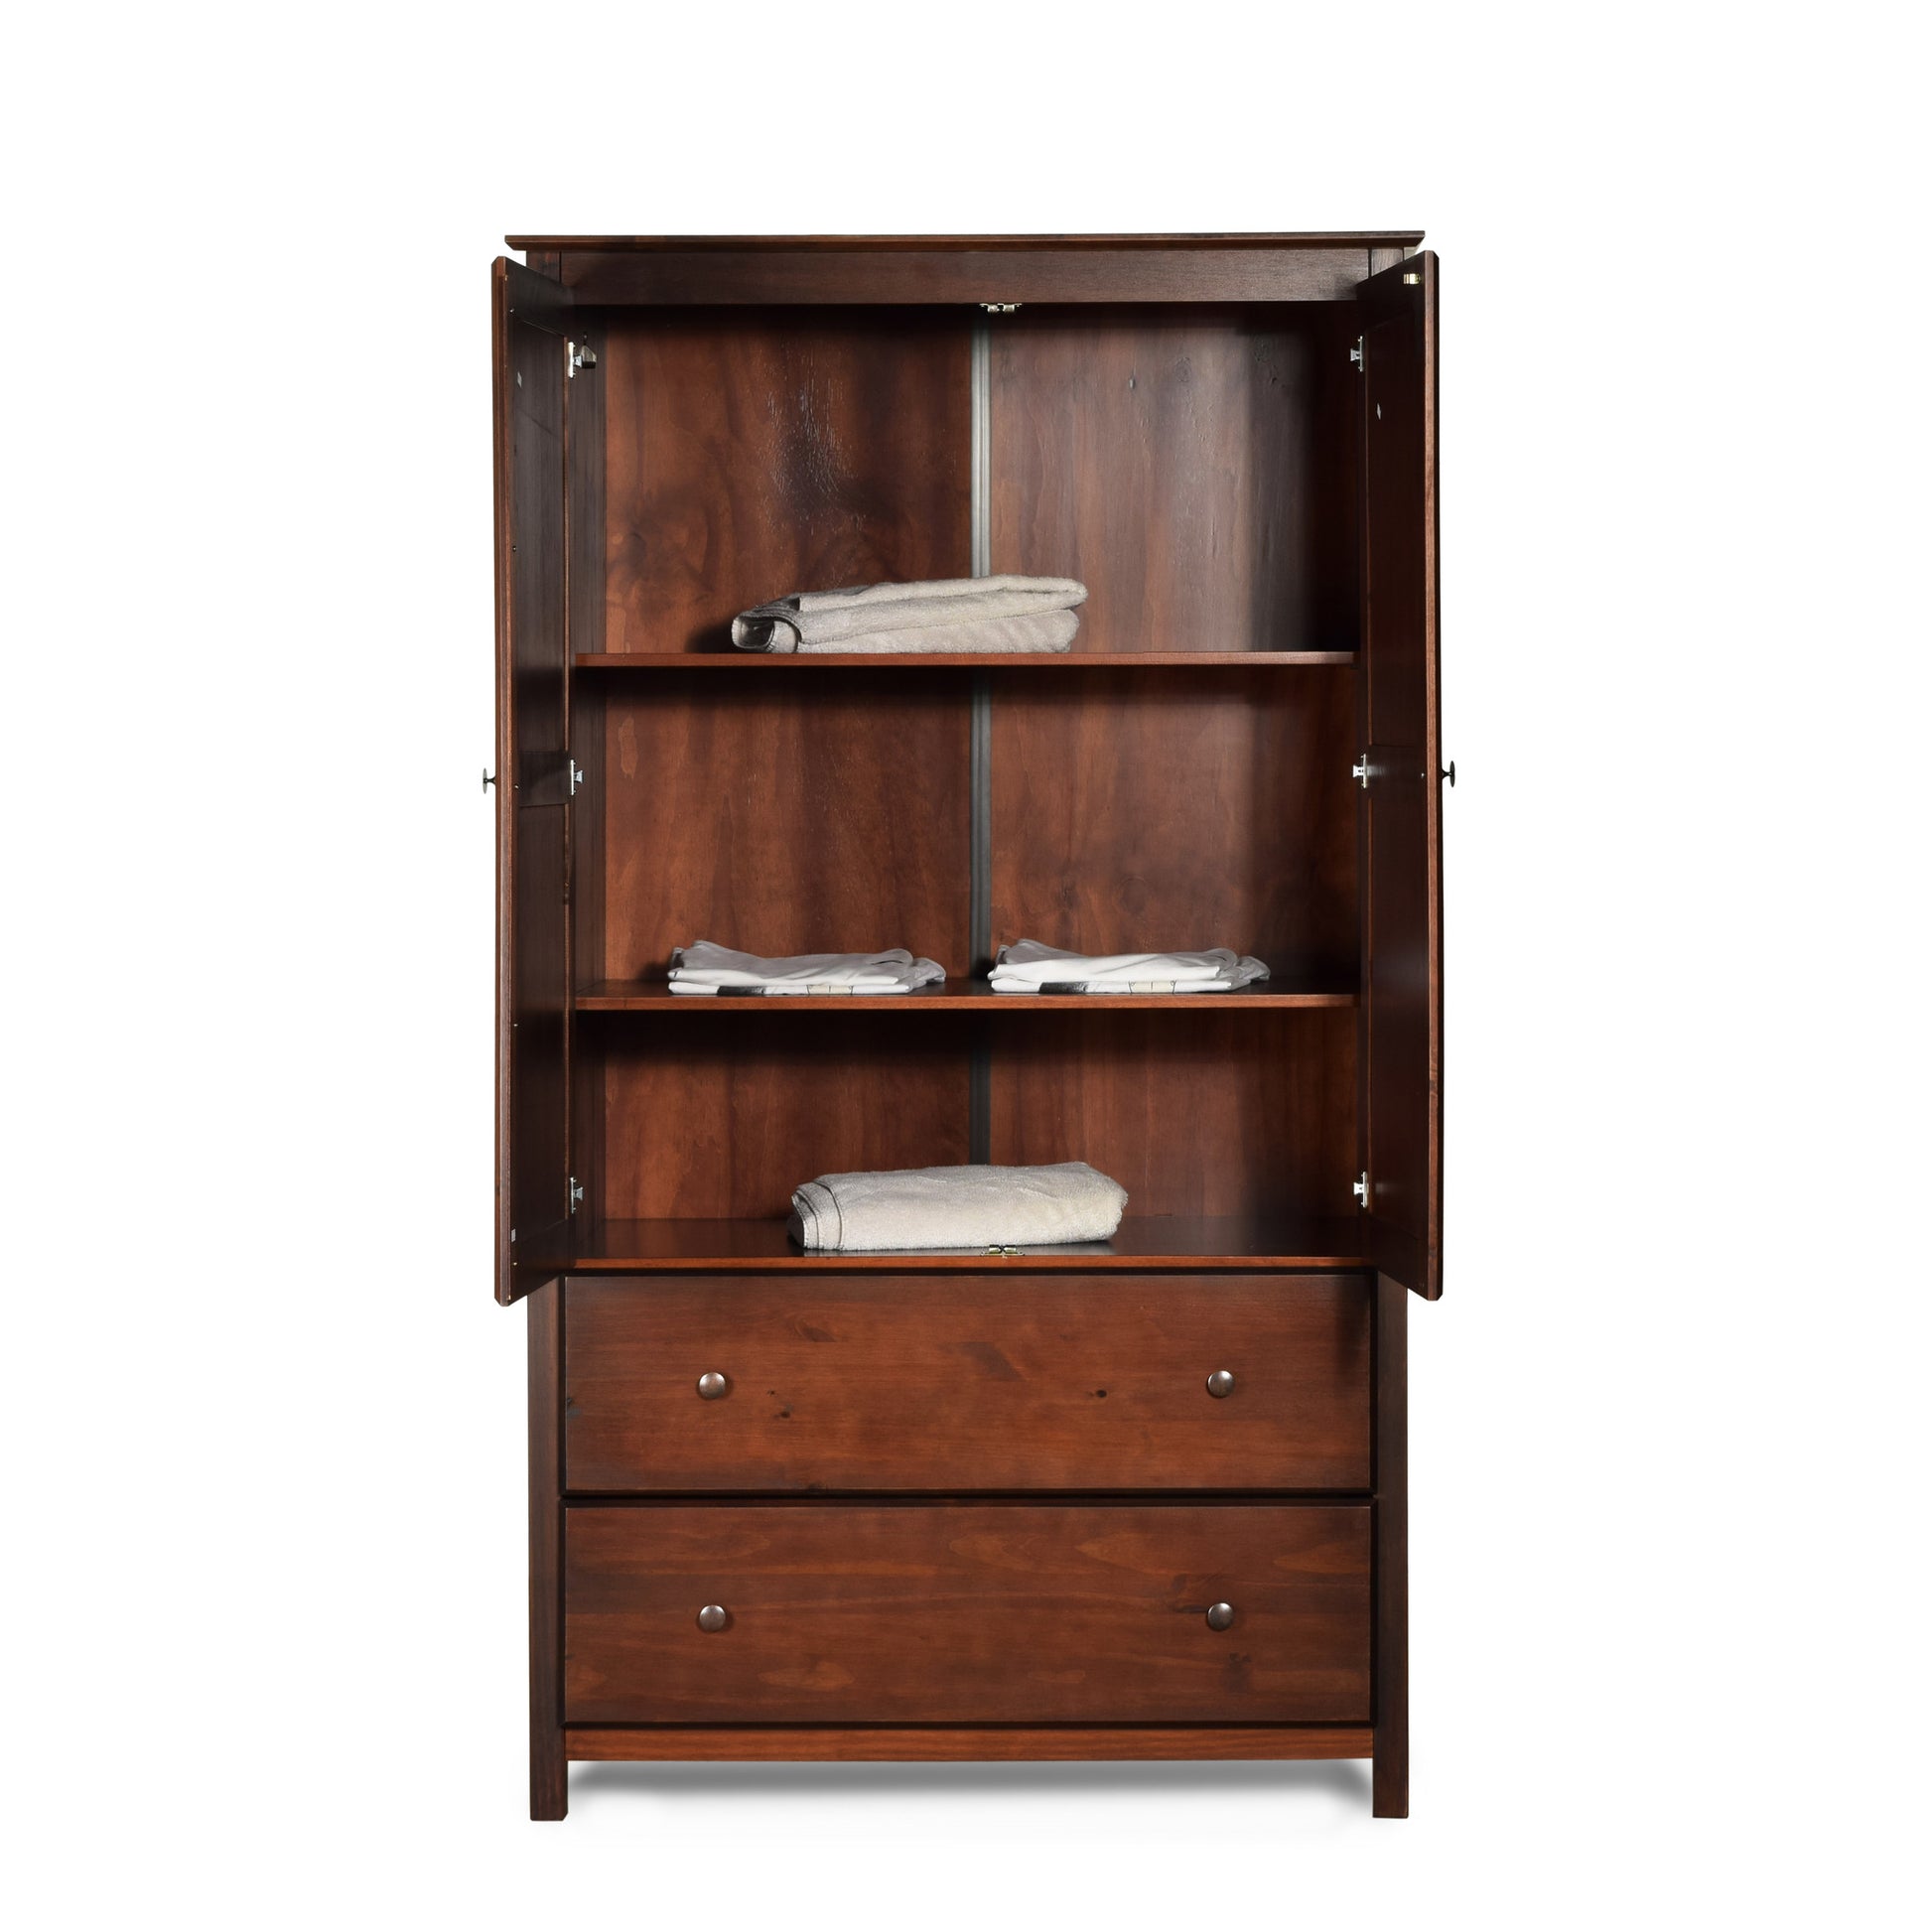 Shaker Optional Wardrobe Shelf - Cherry - Grain Wood Furniture - 2